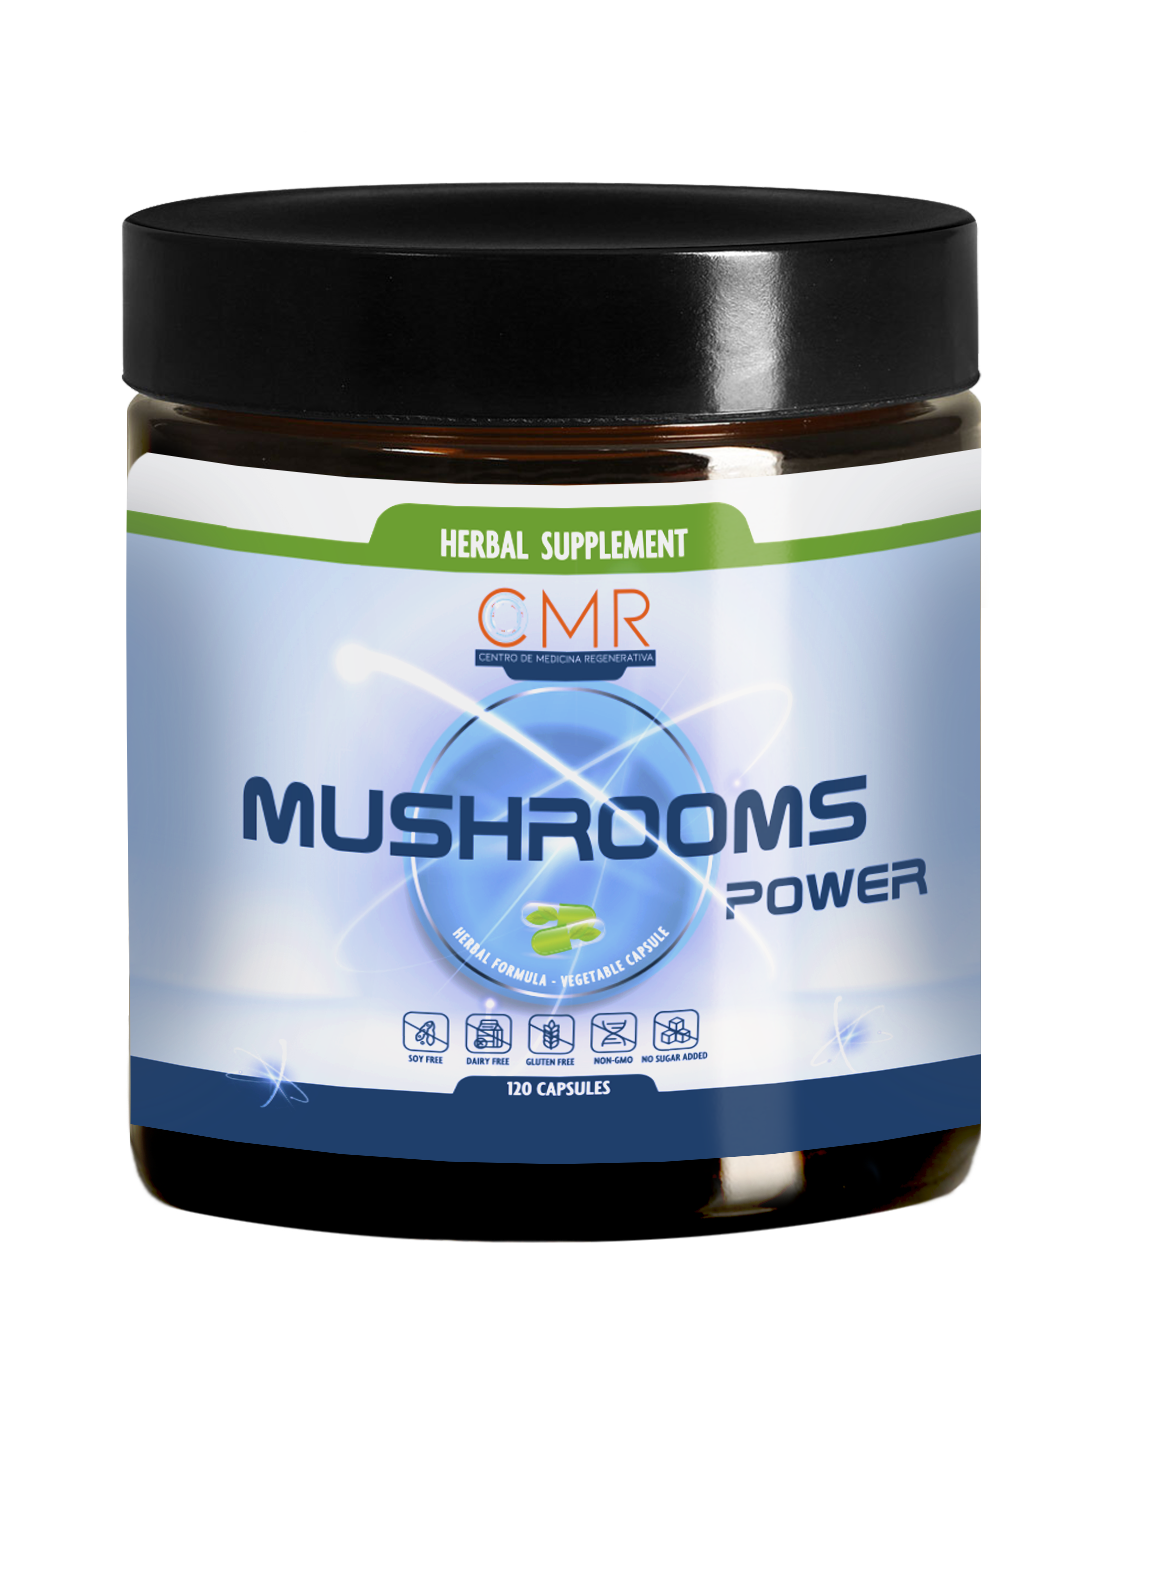 Mushrooms Power